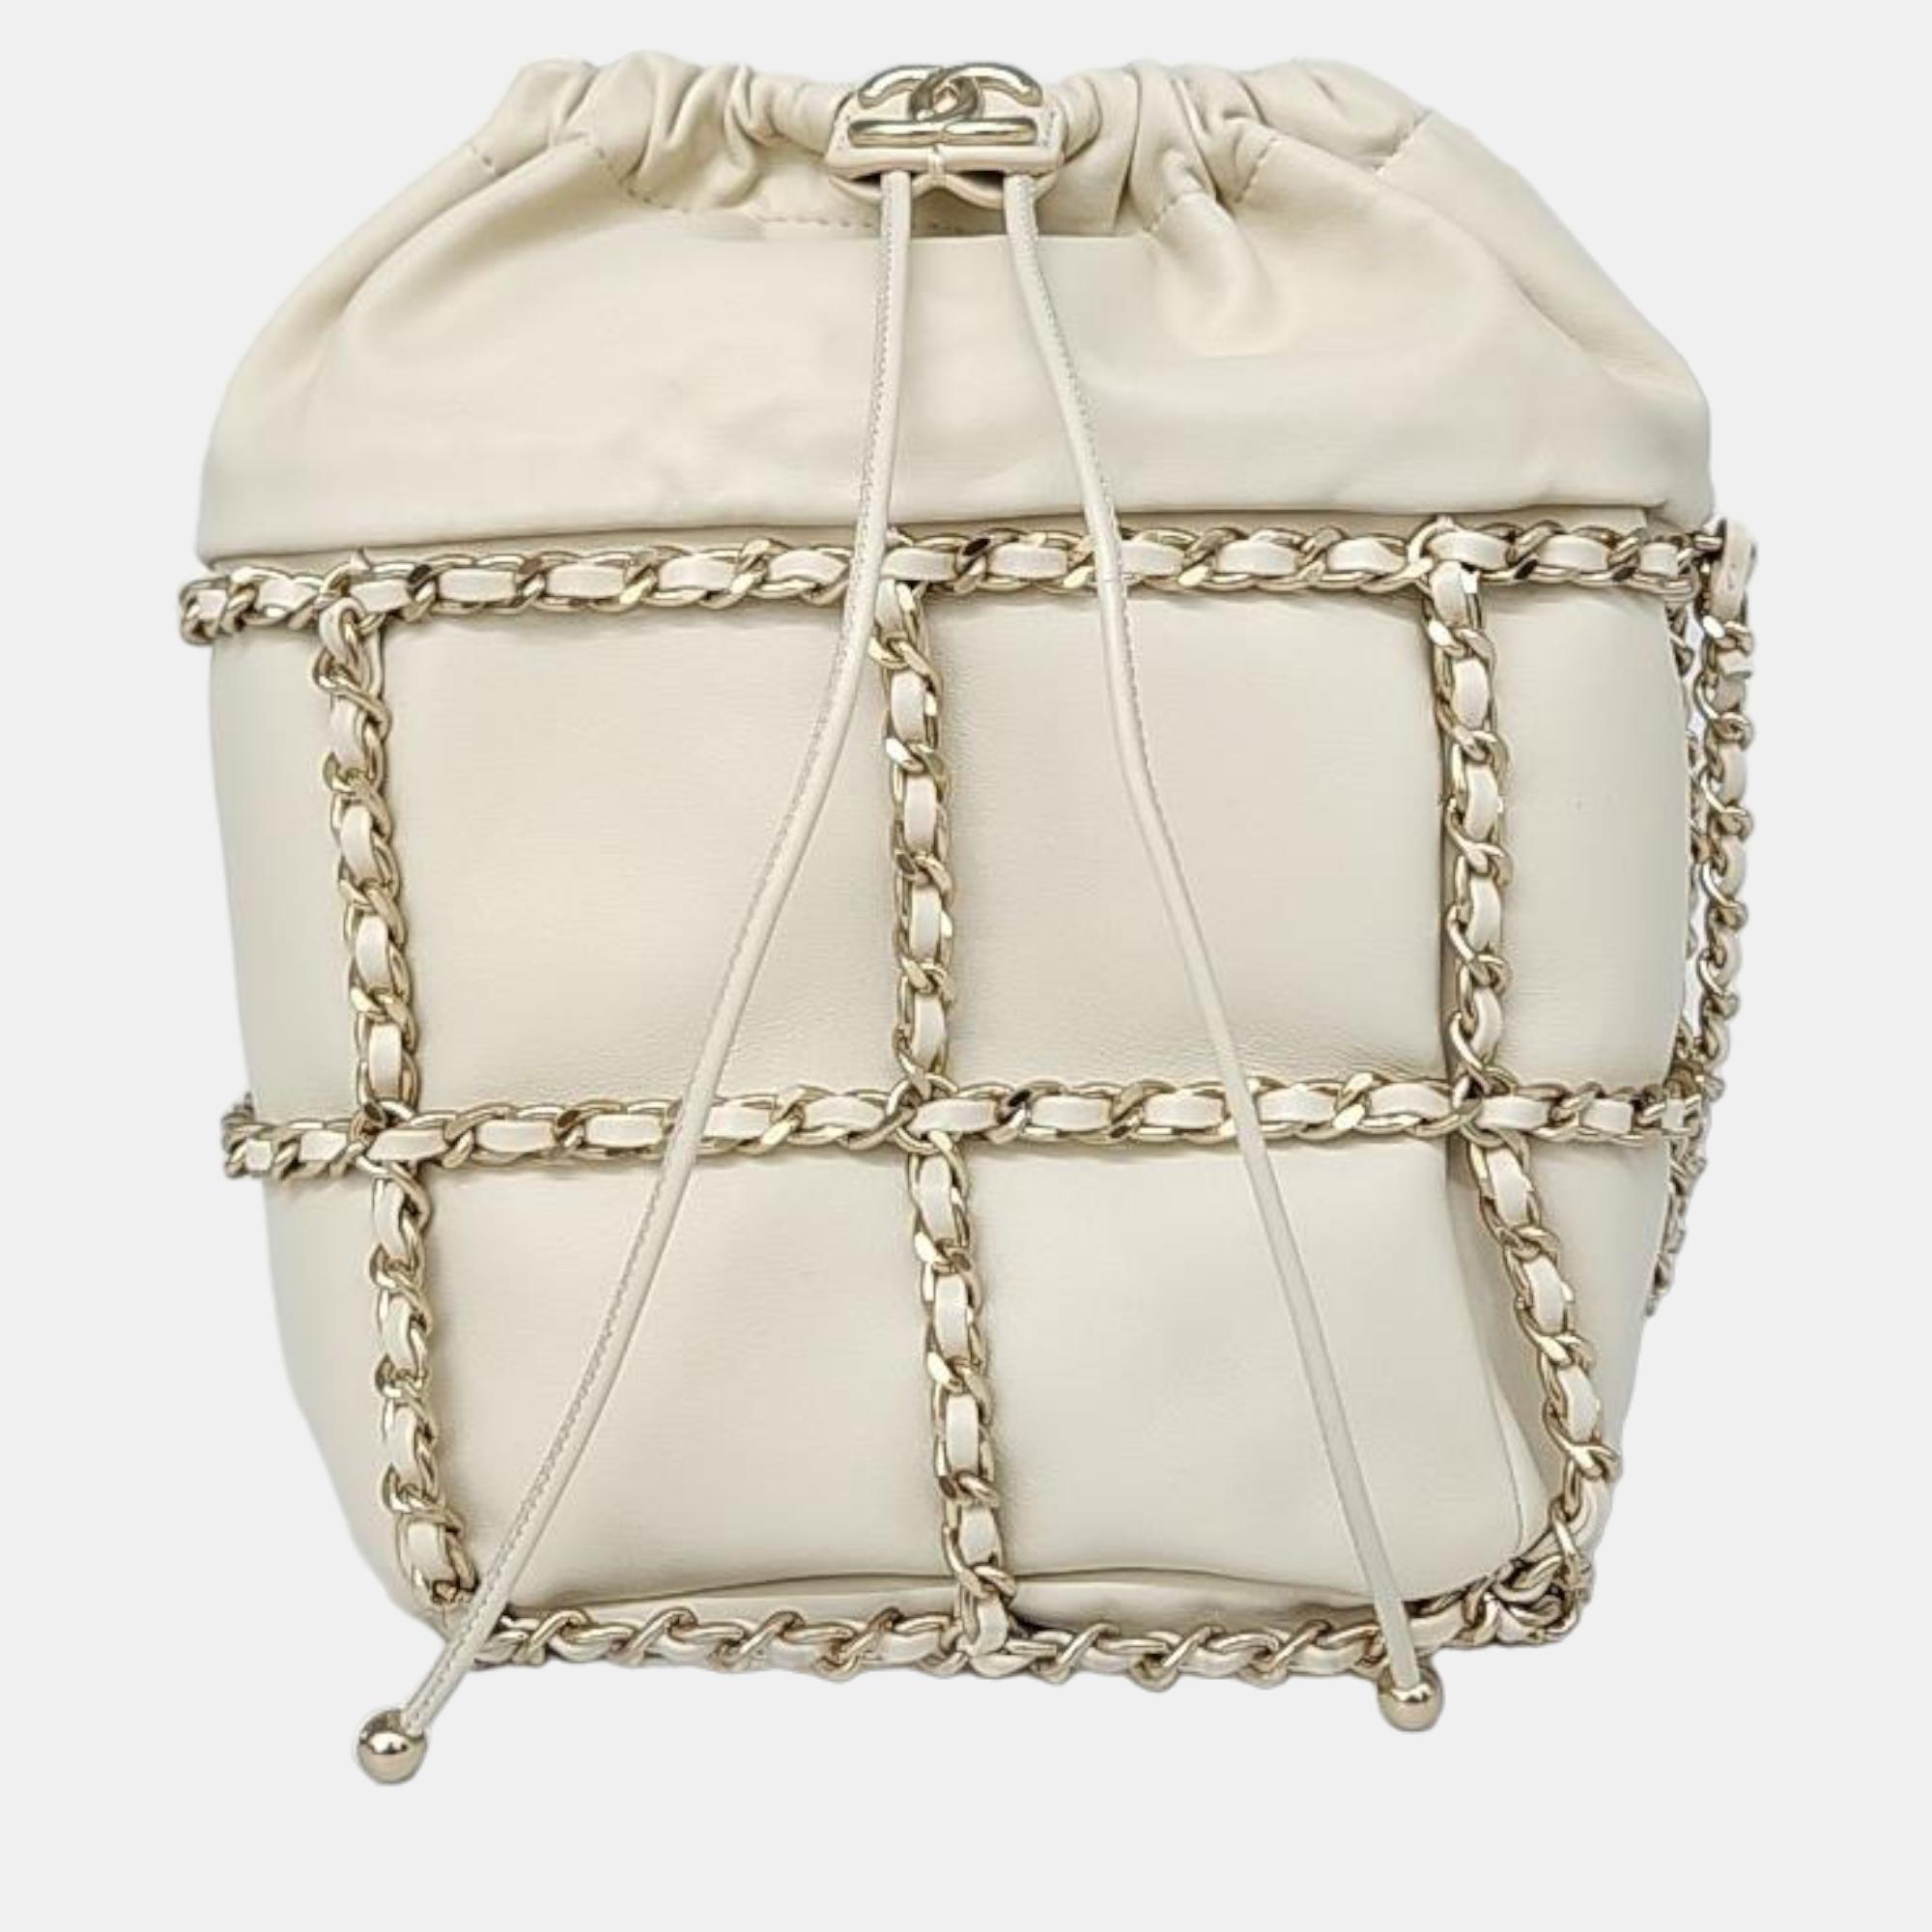 Chanel beige leather bucket chain drawstring cc shoulder bag